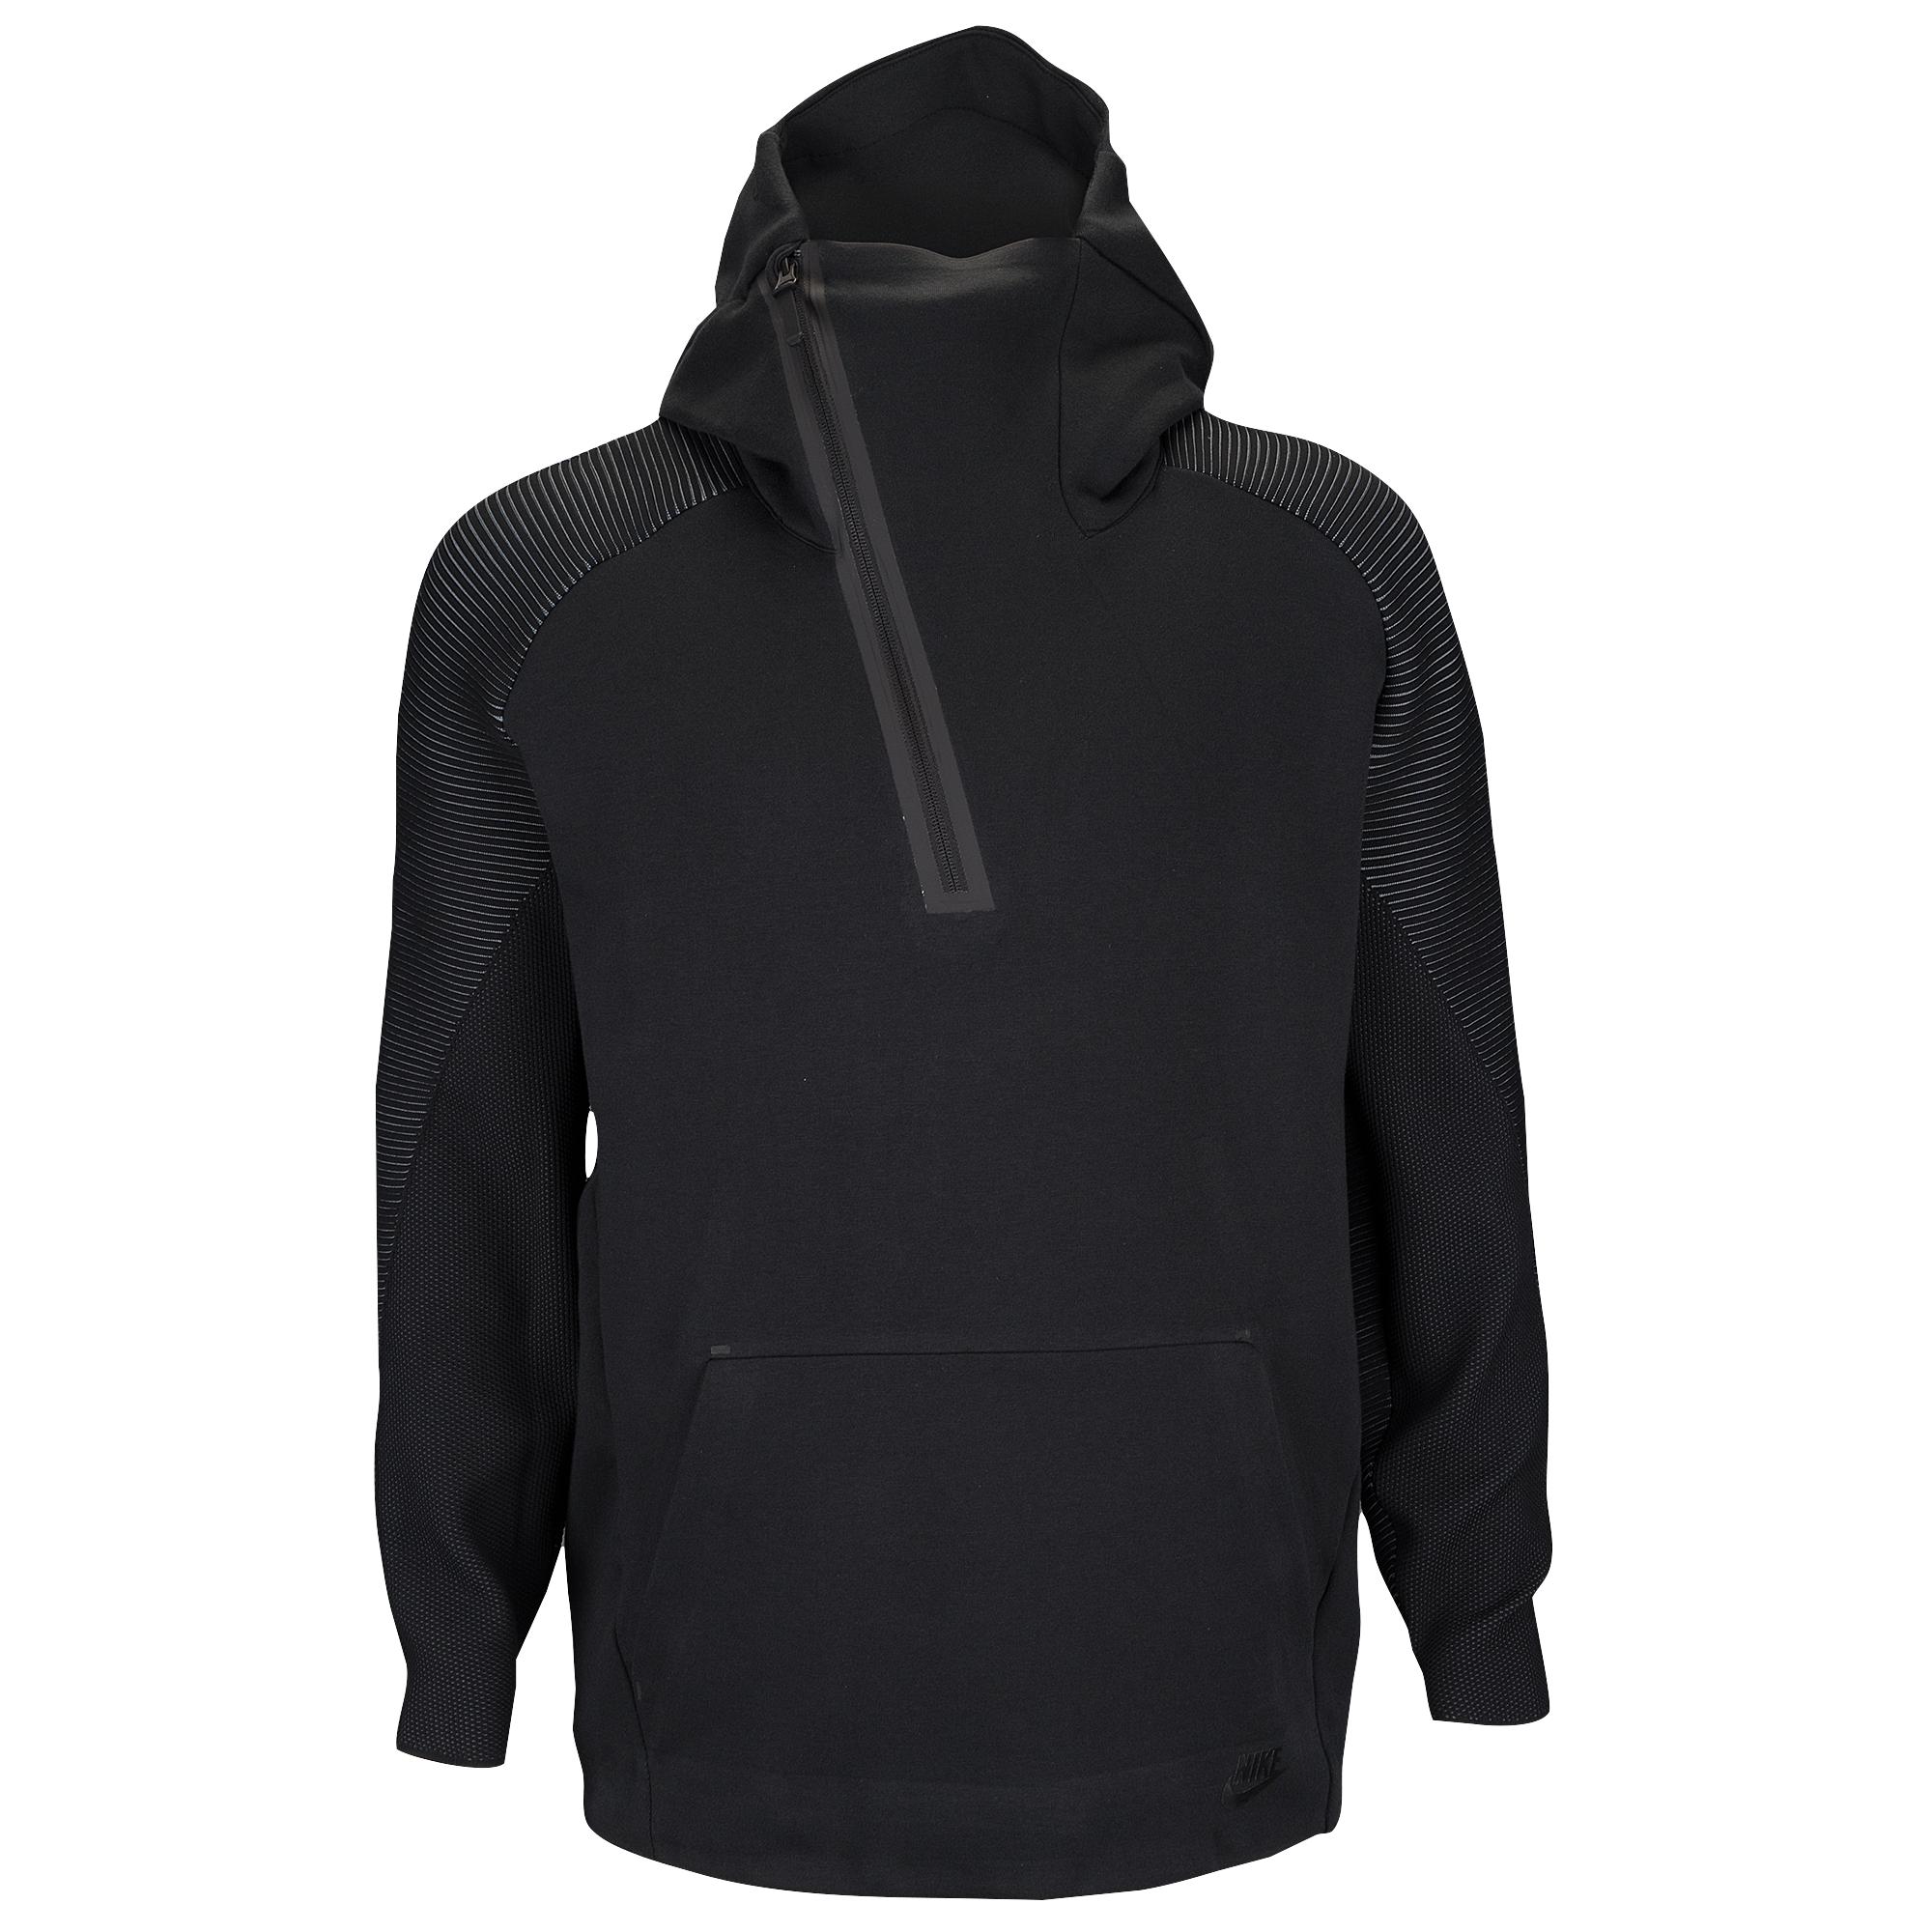 Nike Tech Fleece Half Zip Tn Hoodie in Black/Black (Black) for Men - Lyst